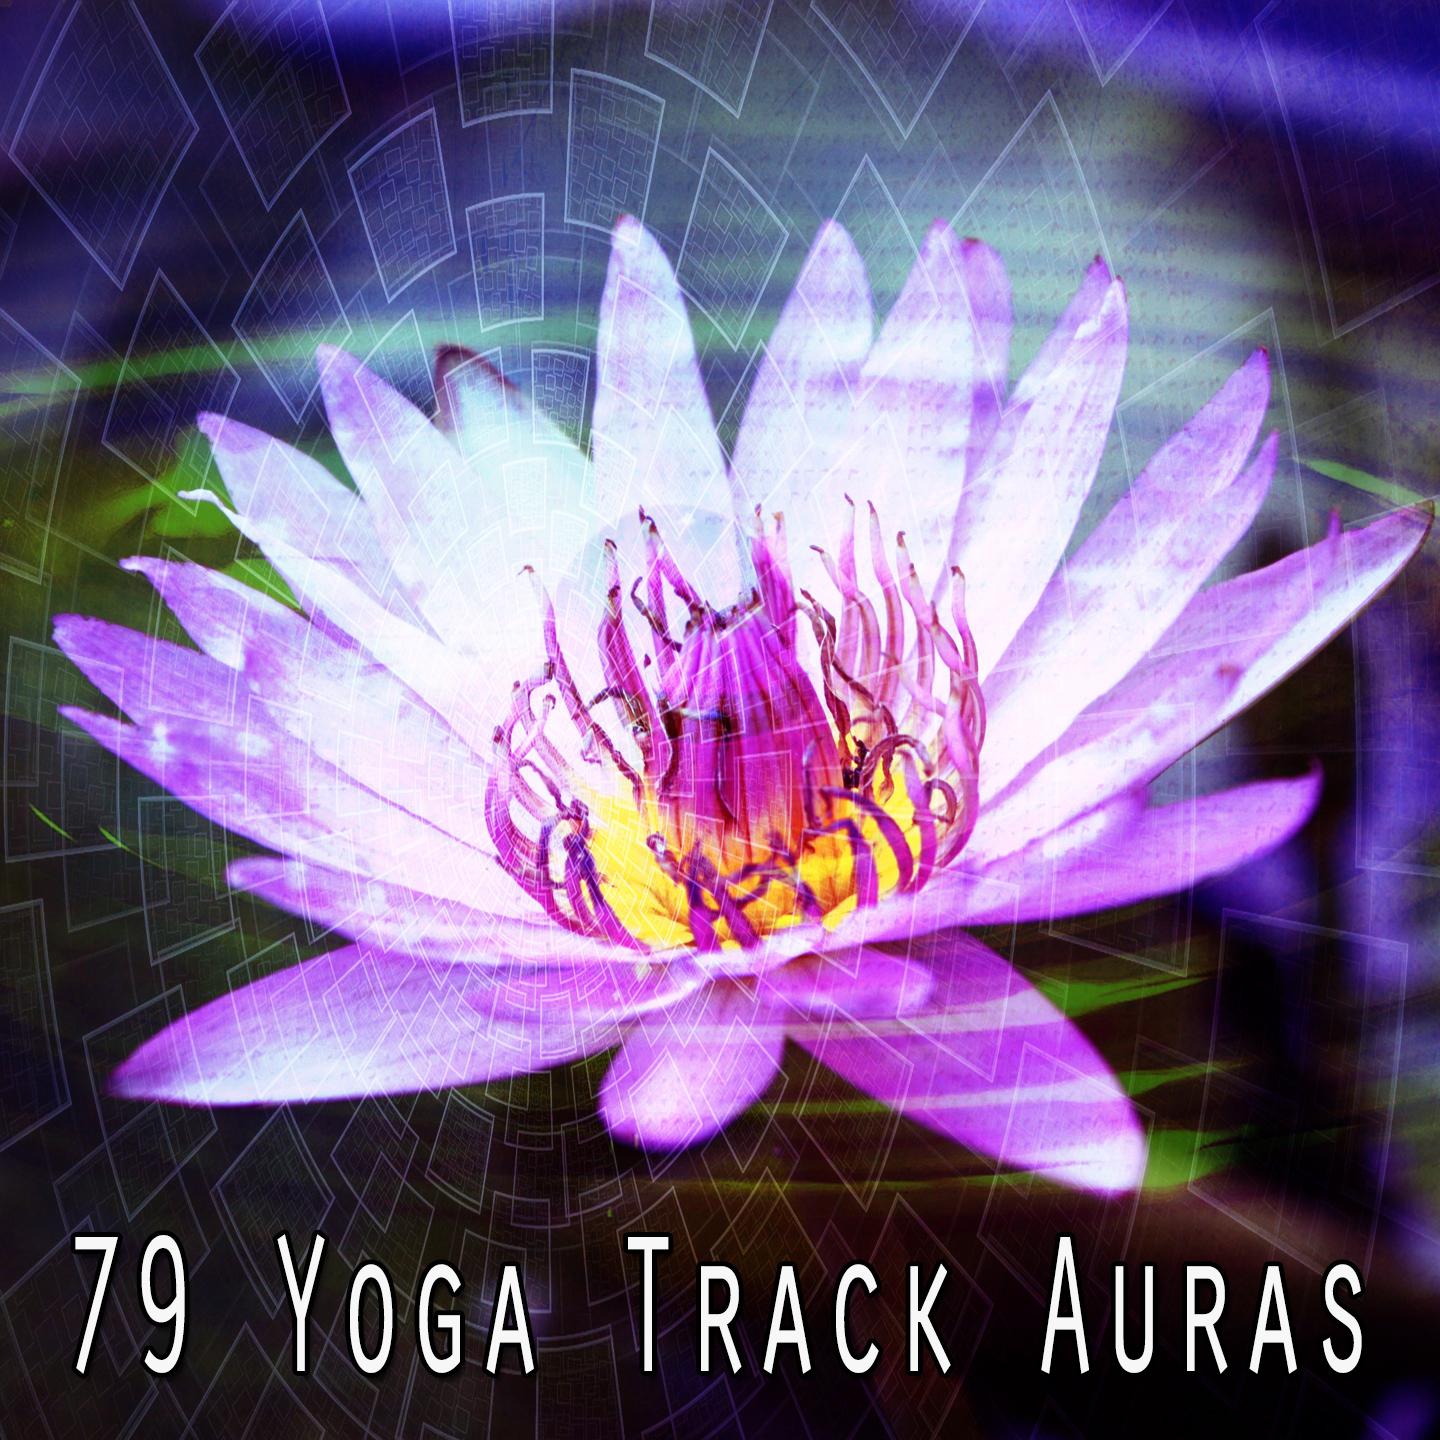 79 Yoga Track Auras